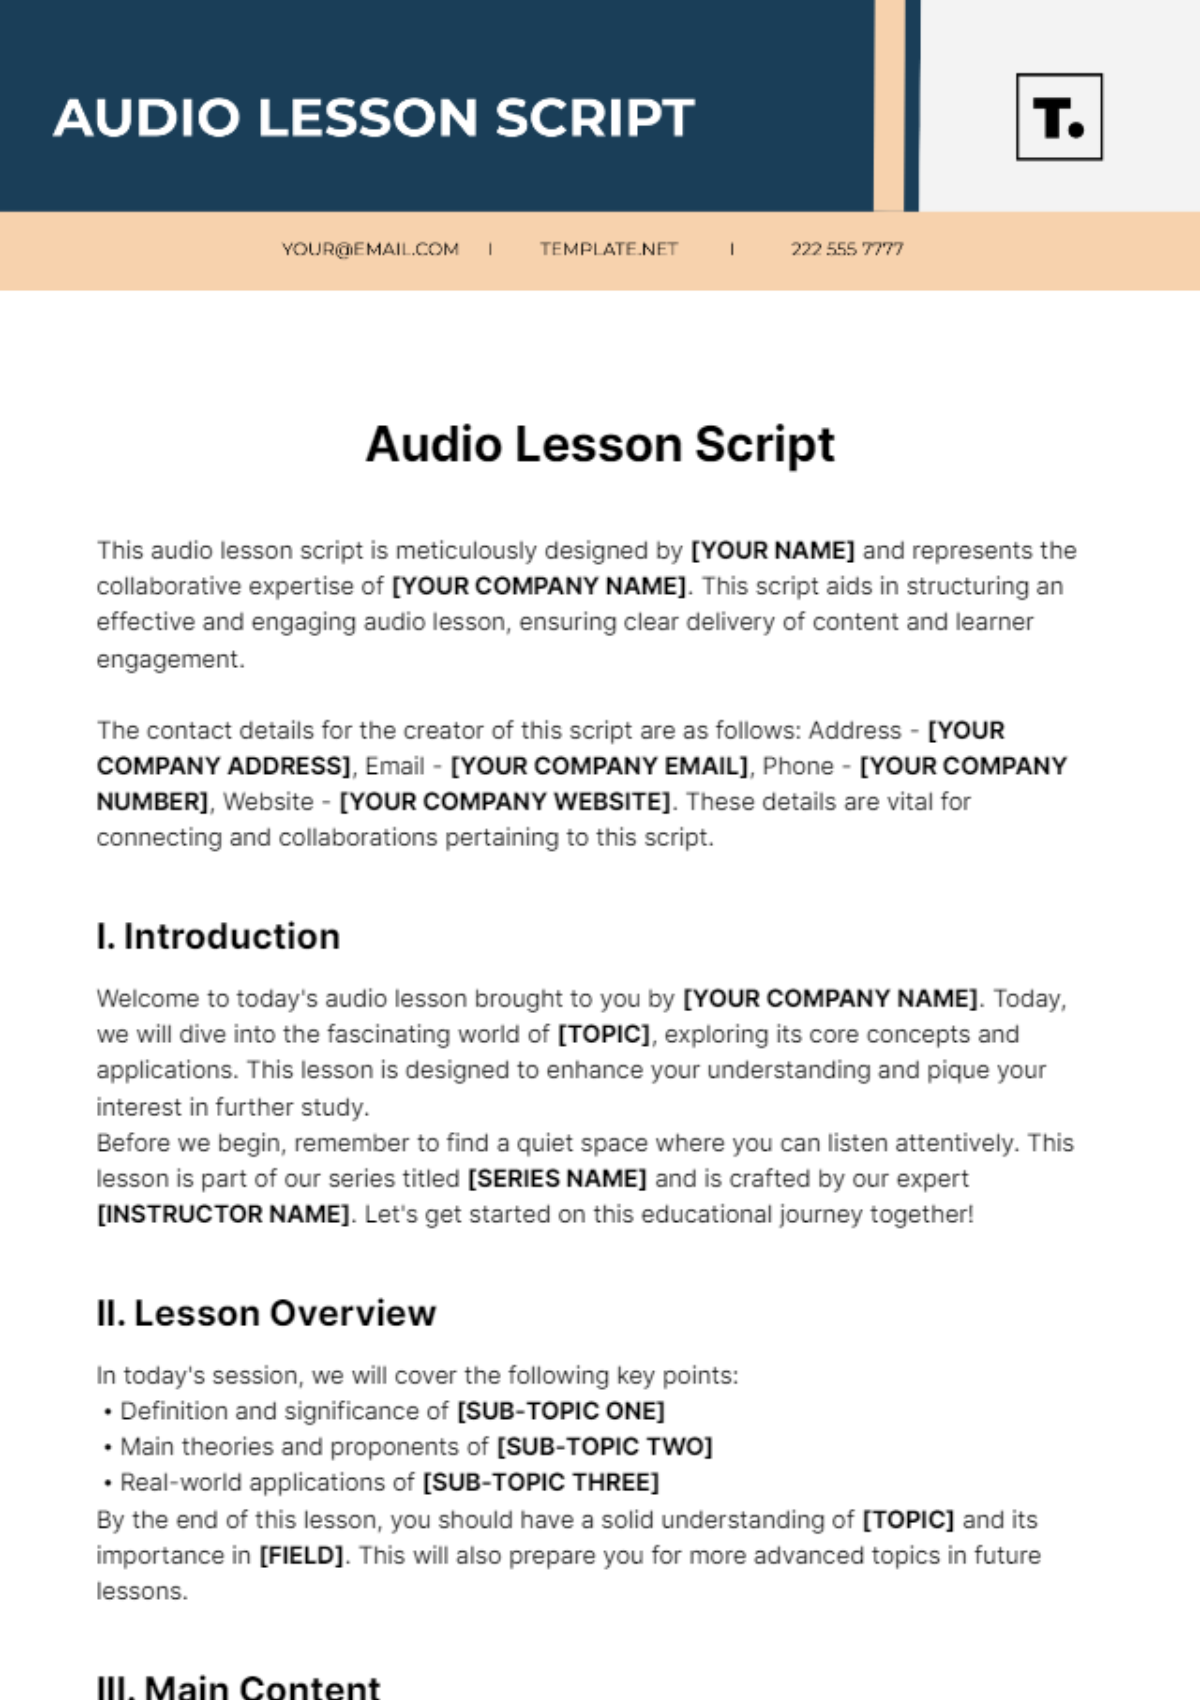 Audio Lesson Script Template